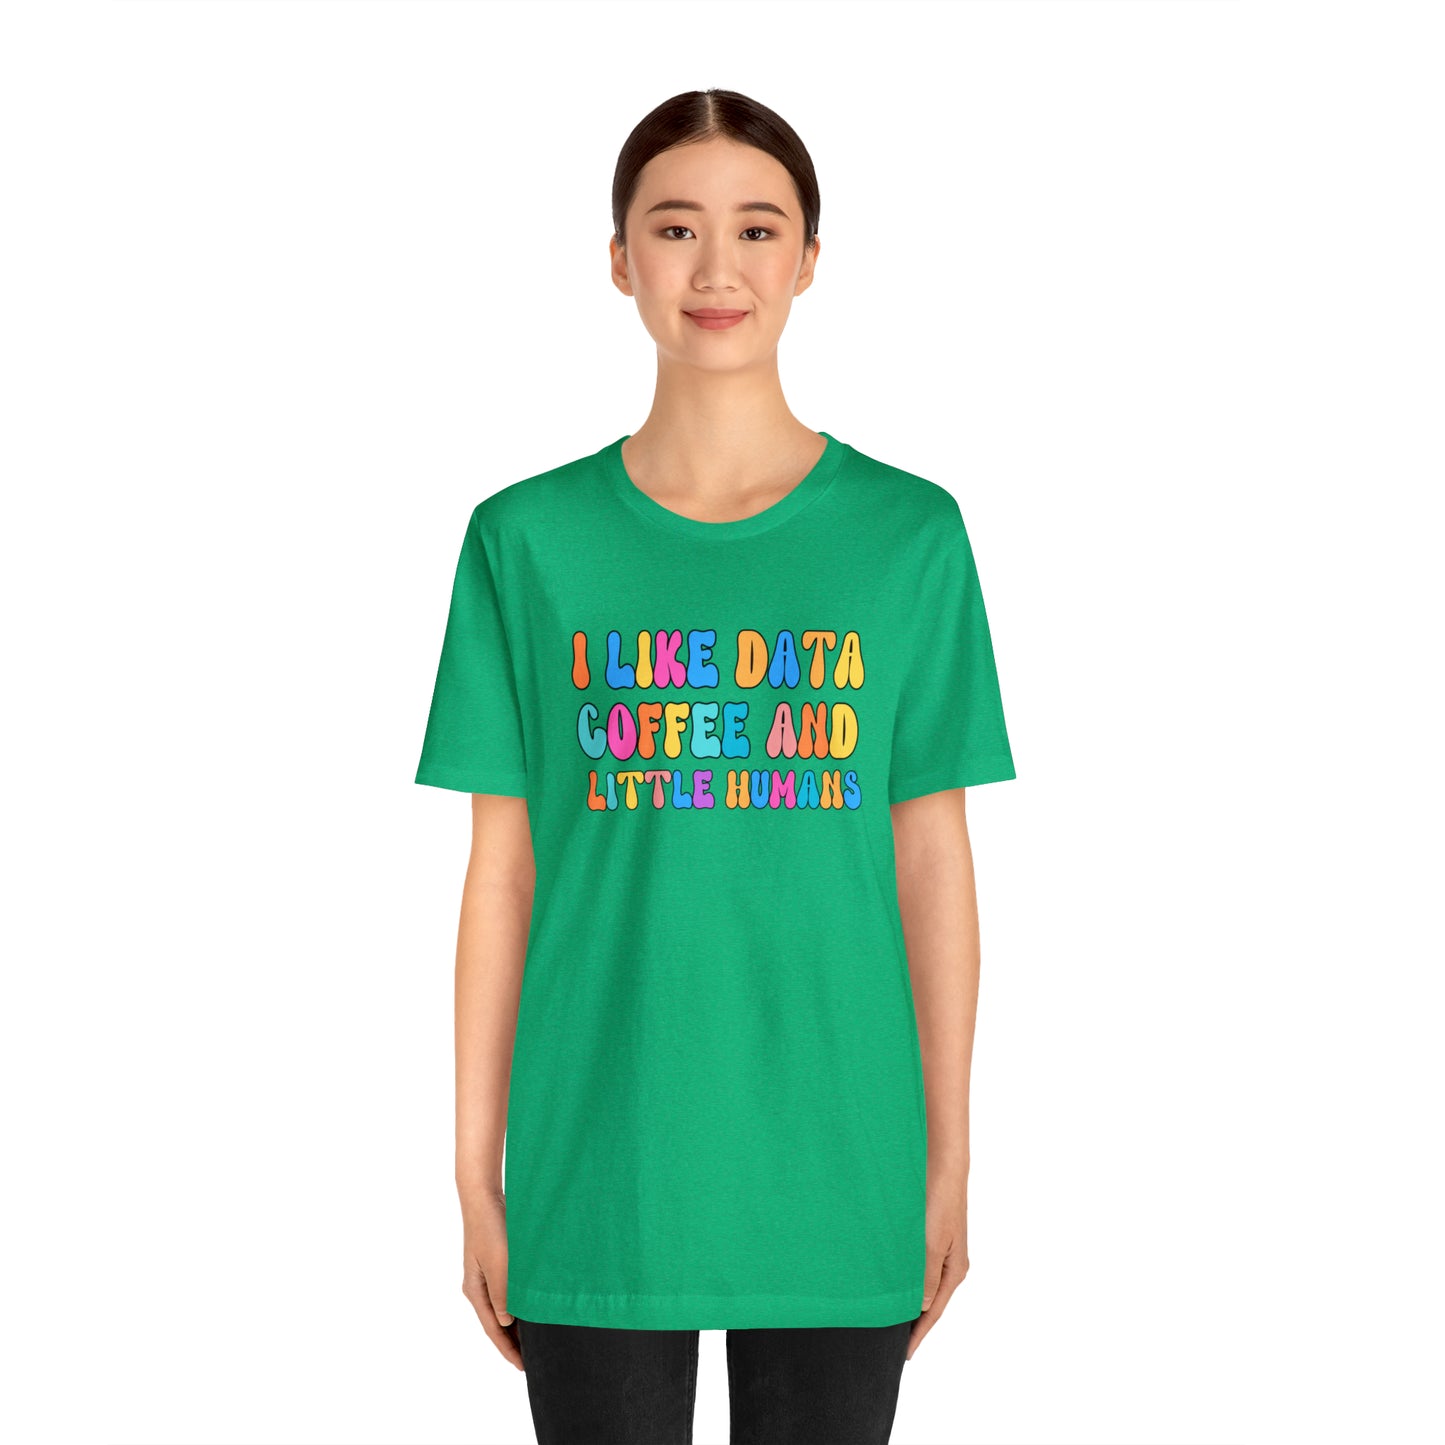 Sped Teacher Shirt, Applied Behavior Analysis Shirt, Physical Therapy Shirt, Physical Therapy Gifts, Physical Therapist Gift, T182